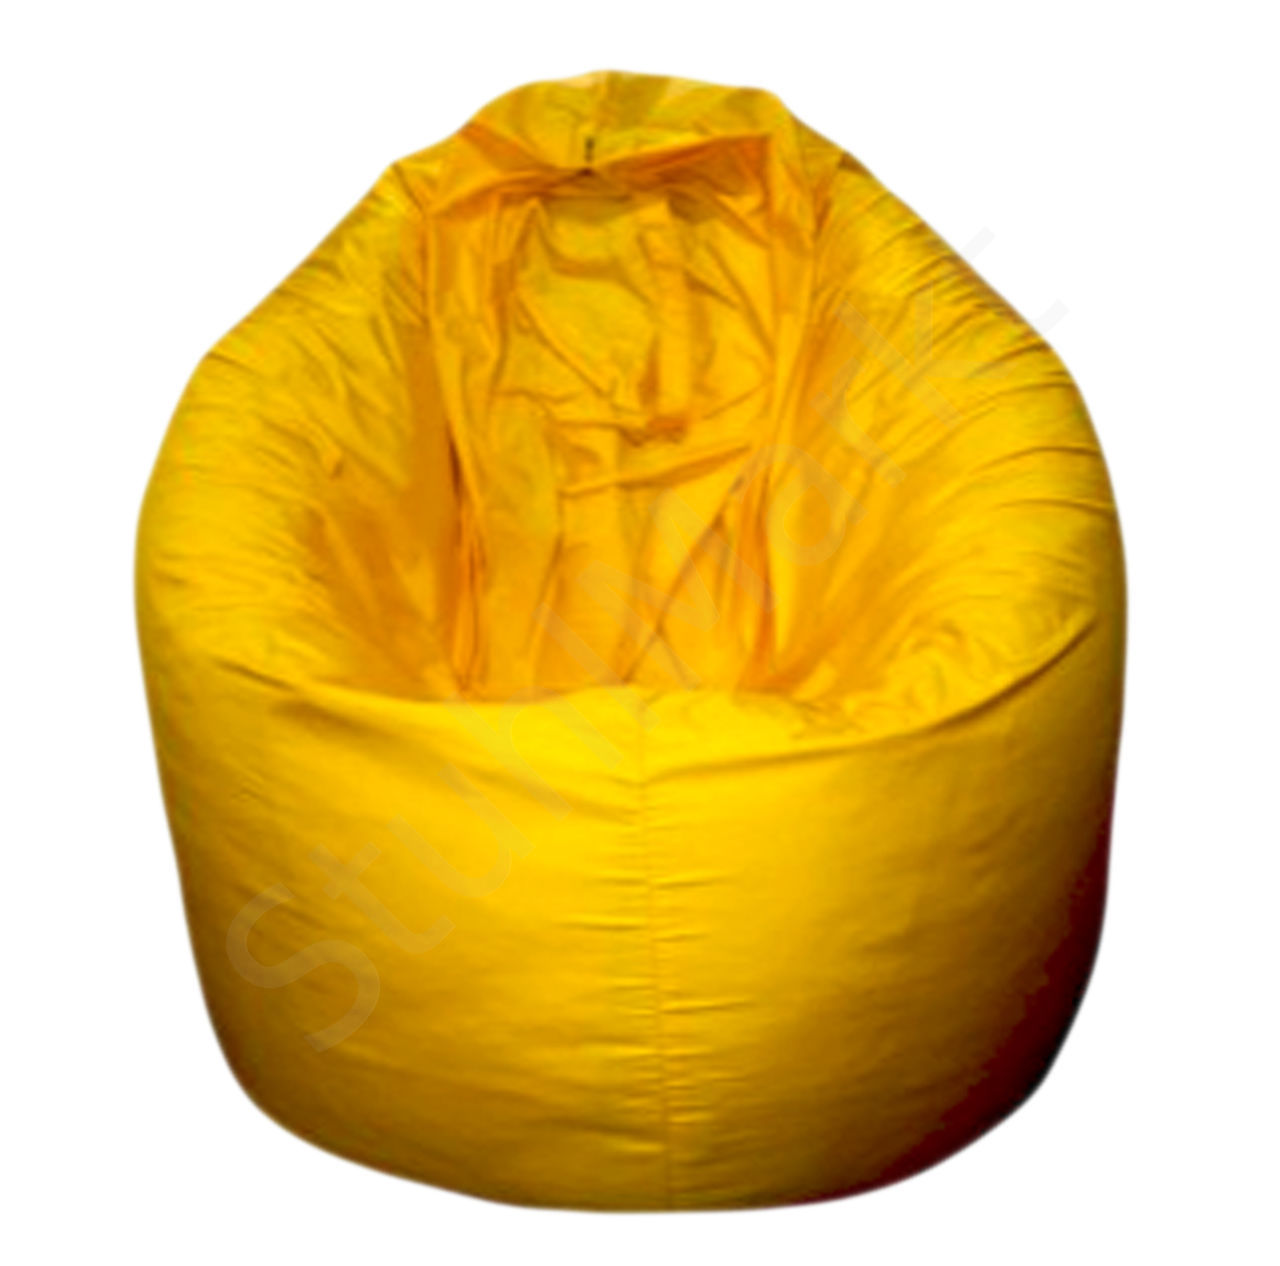 Бескаркасное кресло-мешок Comedy Yellow